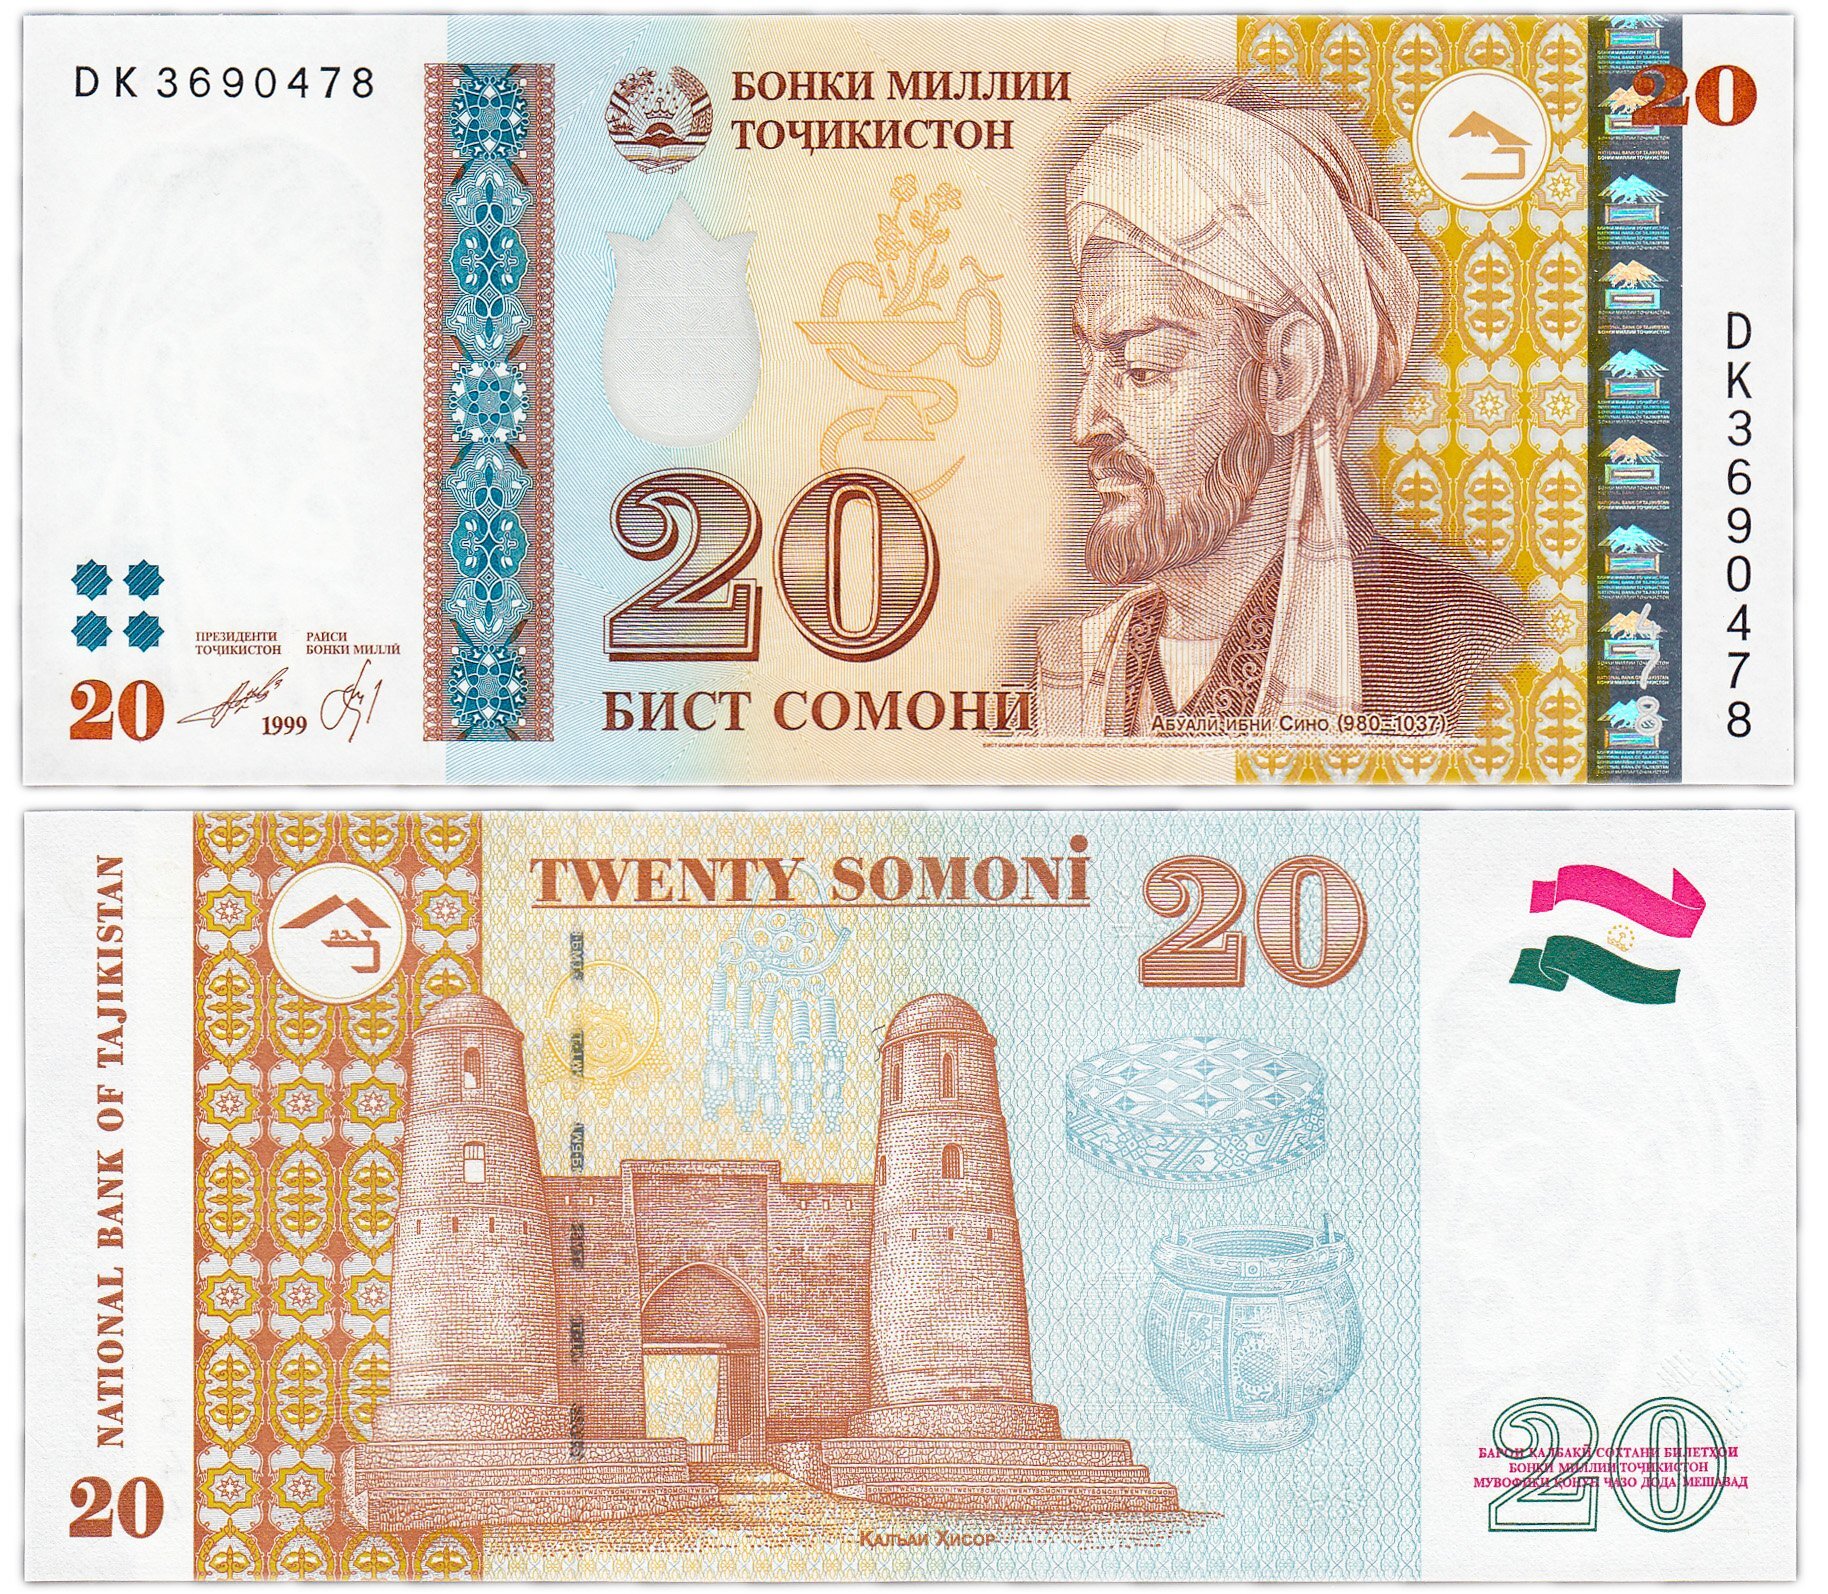 500 таджикски. Купюра Таджикистана 20. Купюра Таджикистанский Сомони. Таджикистан банкнота 20 Сомони 1999. Купюры Таджикистана Сомони.